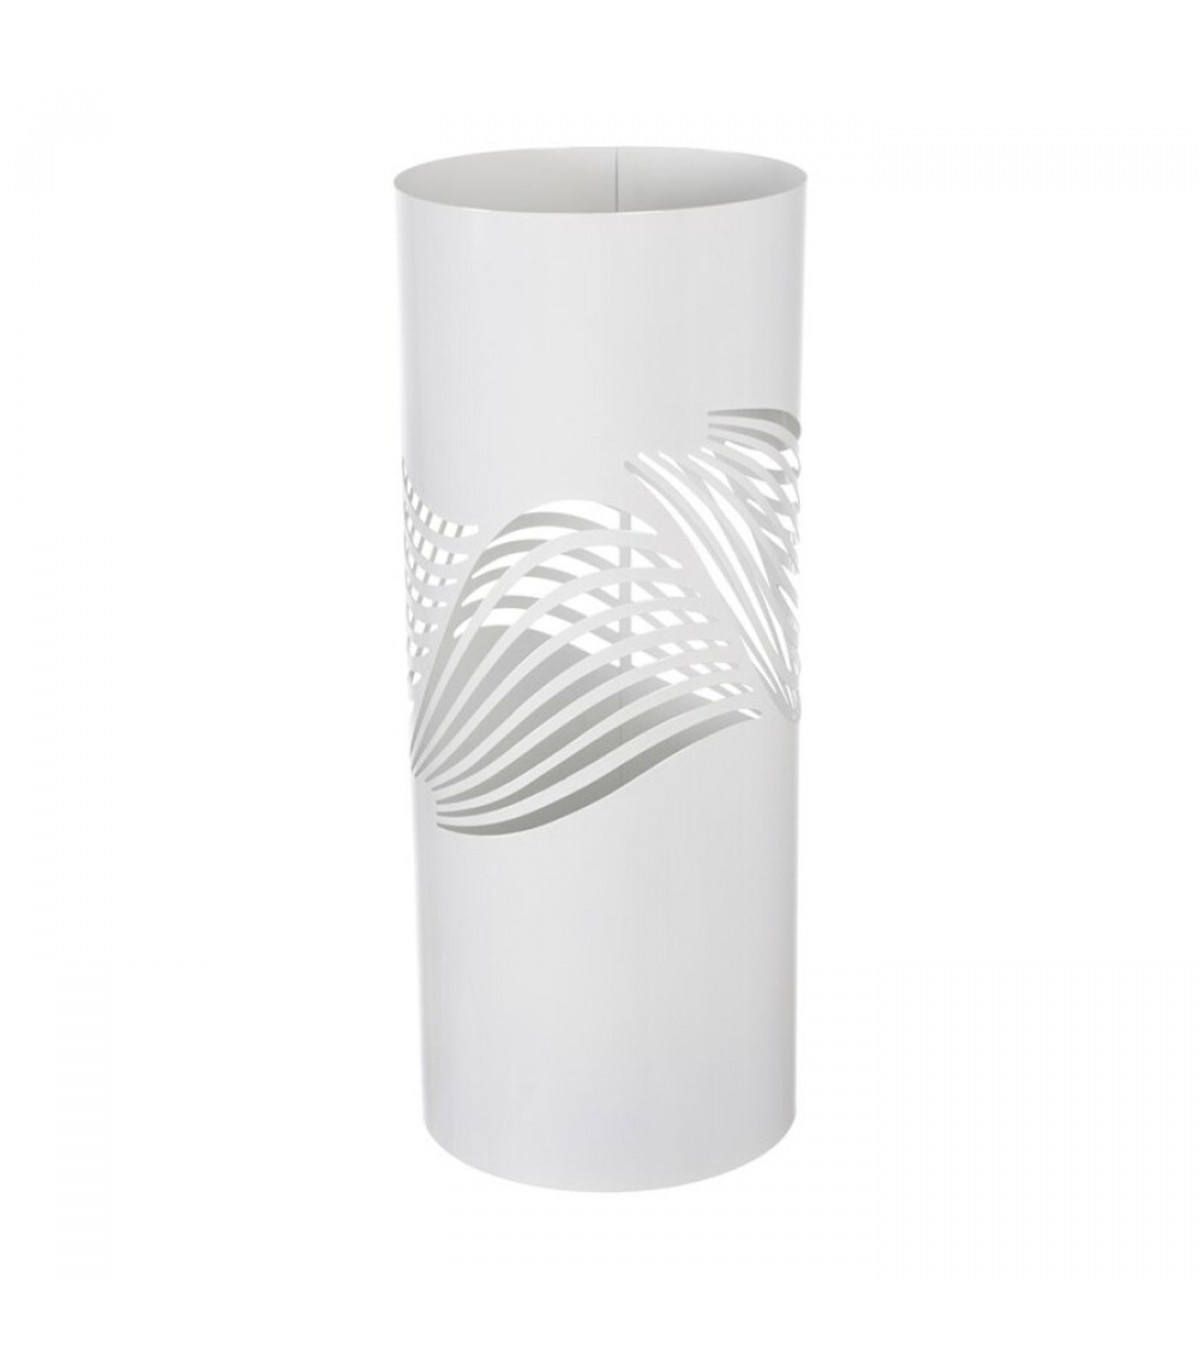 Paragüero blanco redondo de metal, diseño de ondas, 49 x 19,5 cm